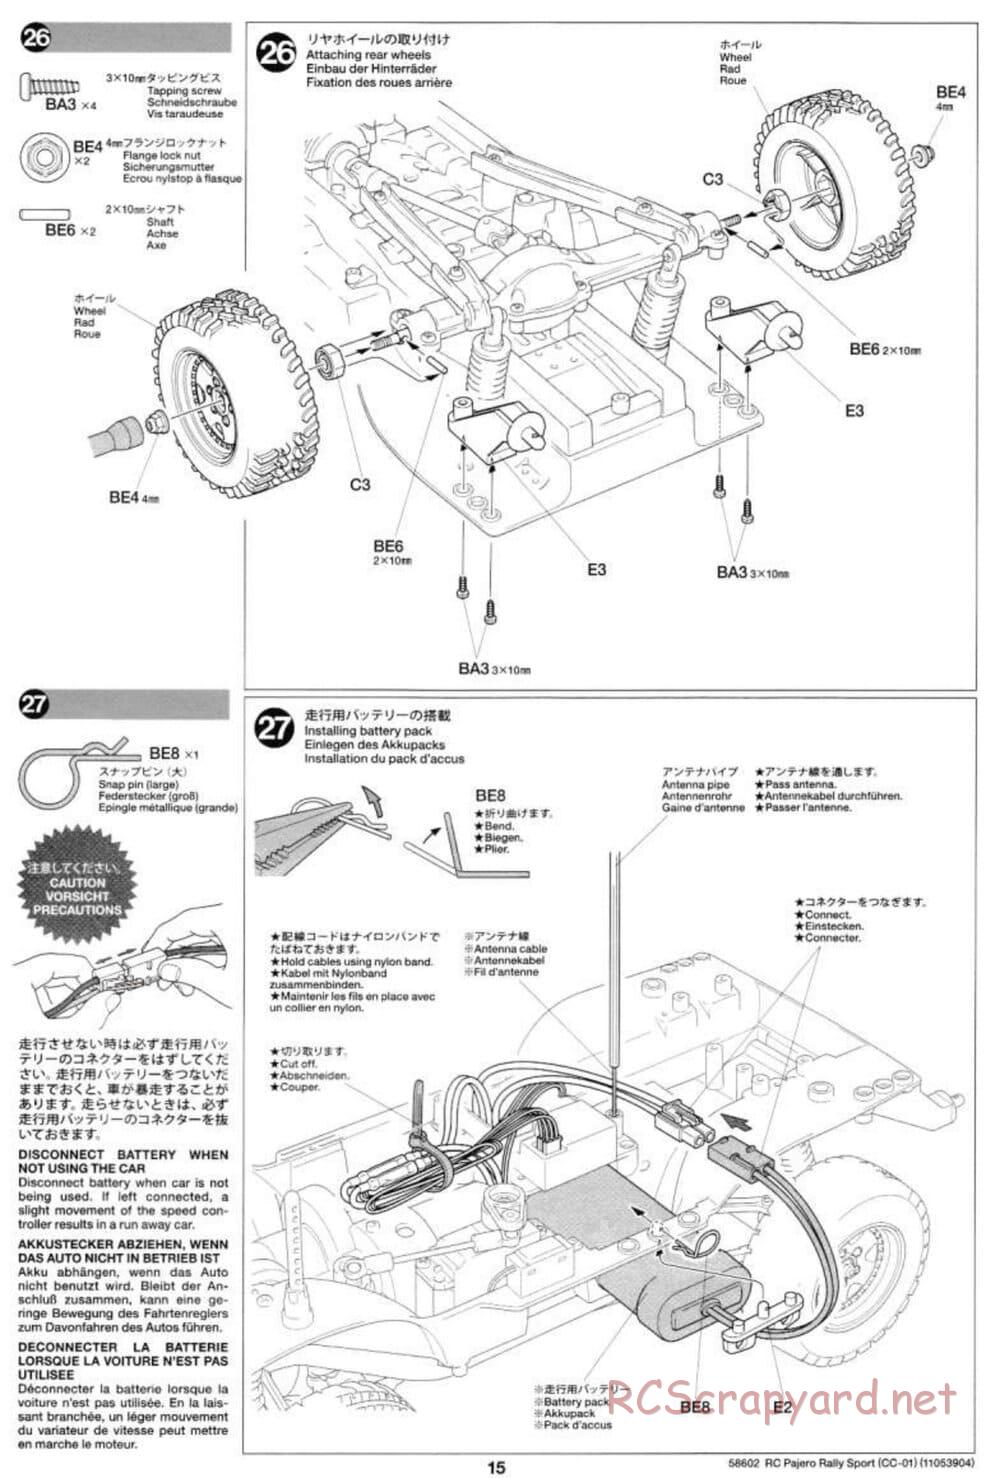 Tamiya - Mitsubishi Pajero Rally Sport - CC-01 Chassis - Manual - Page 15